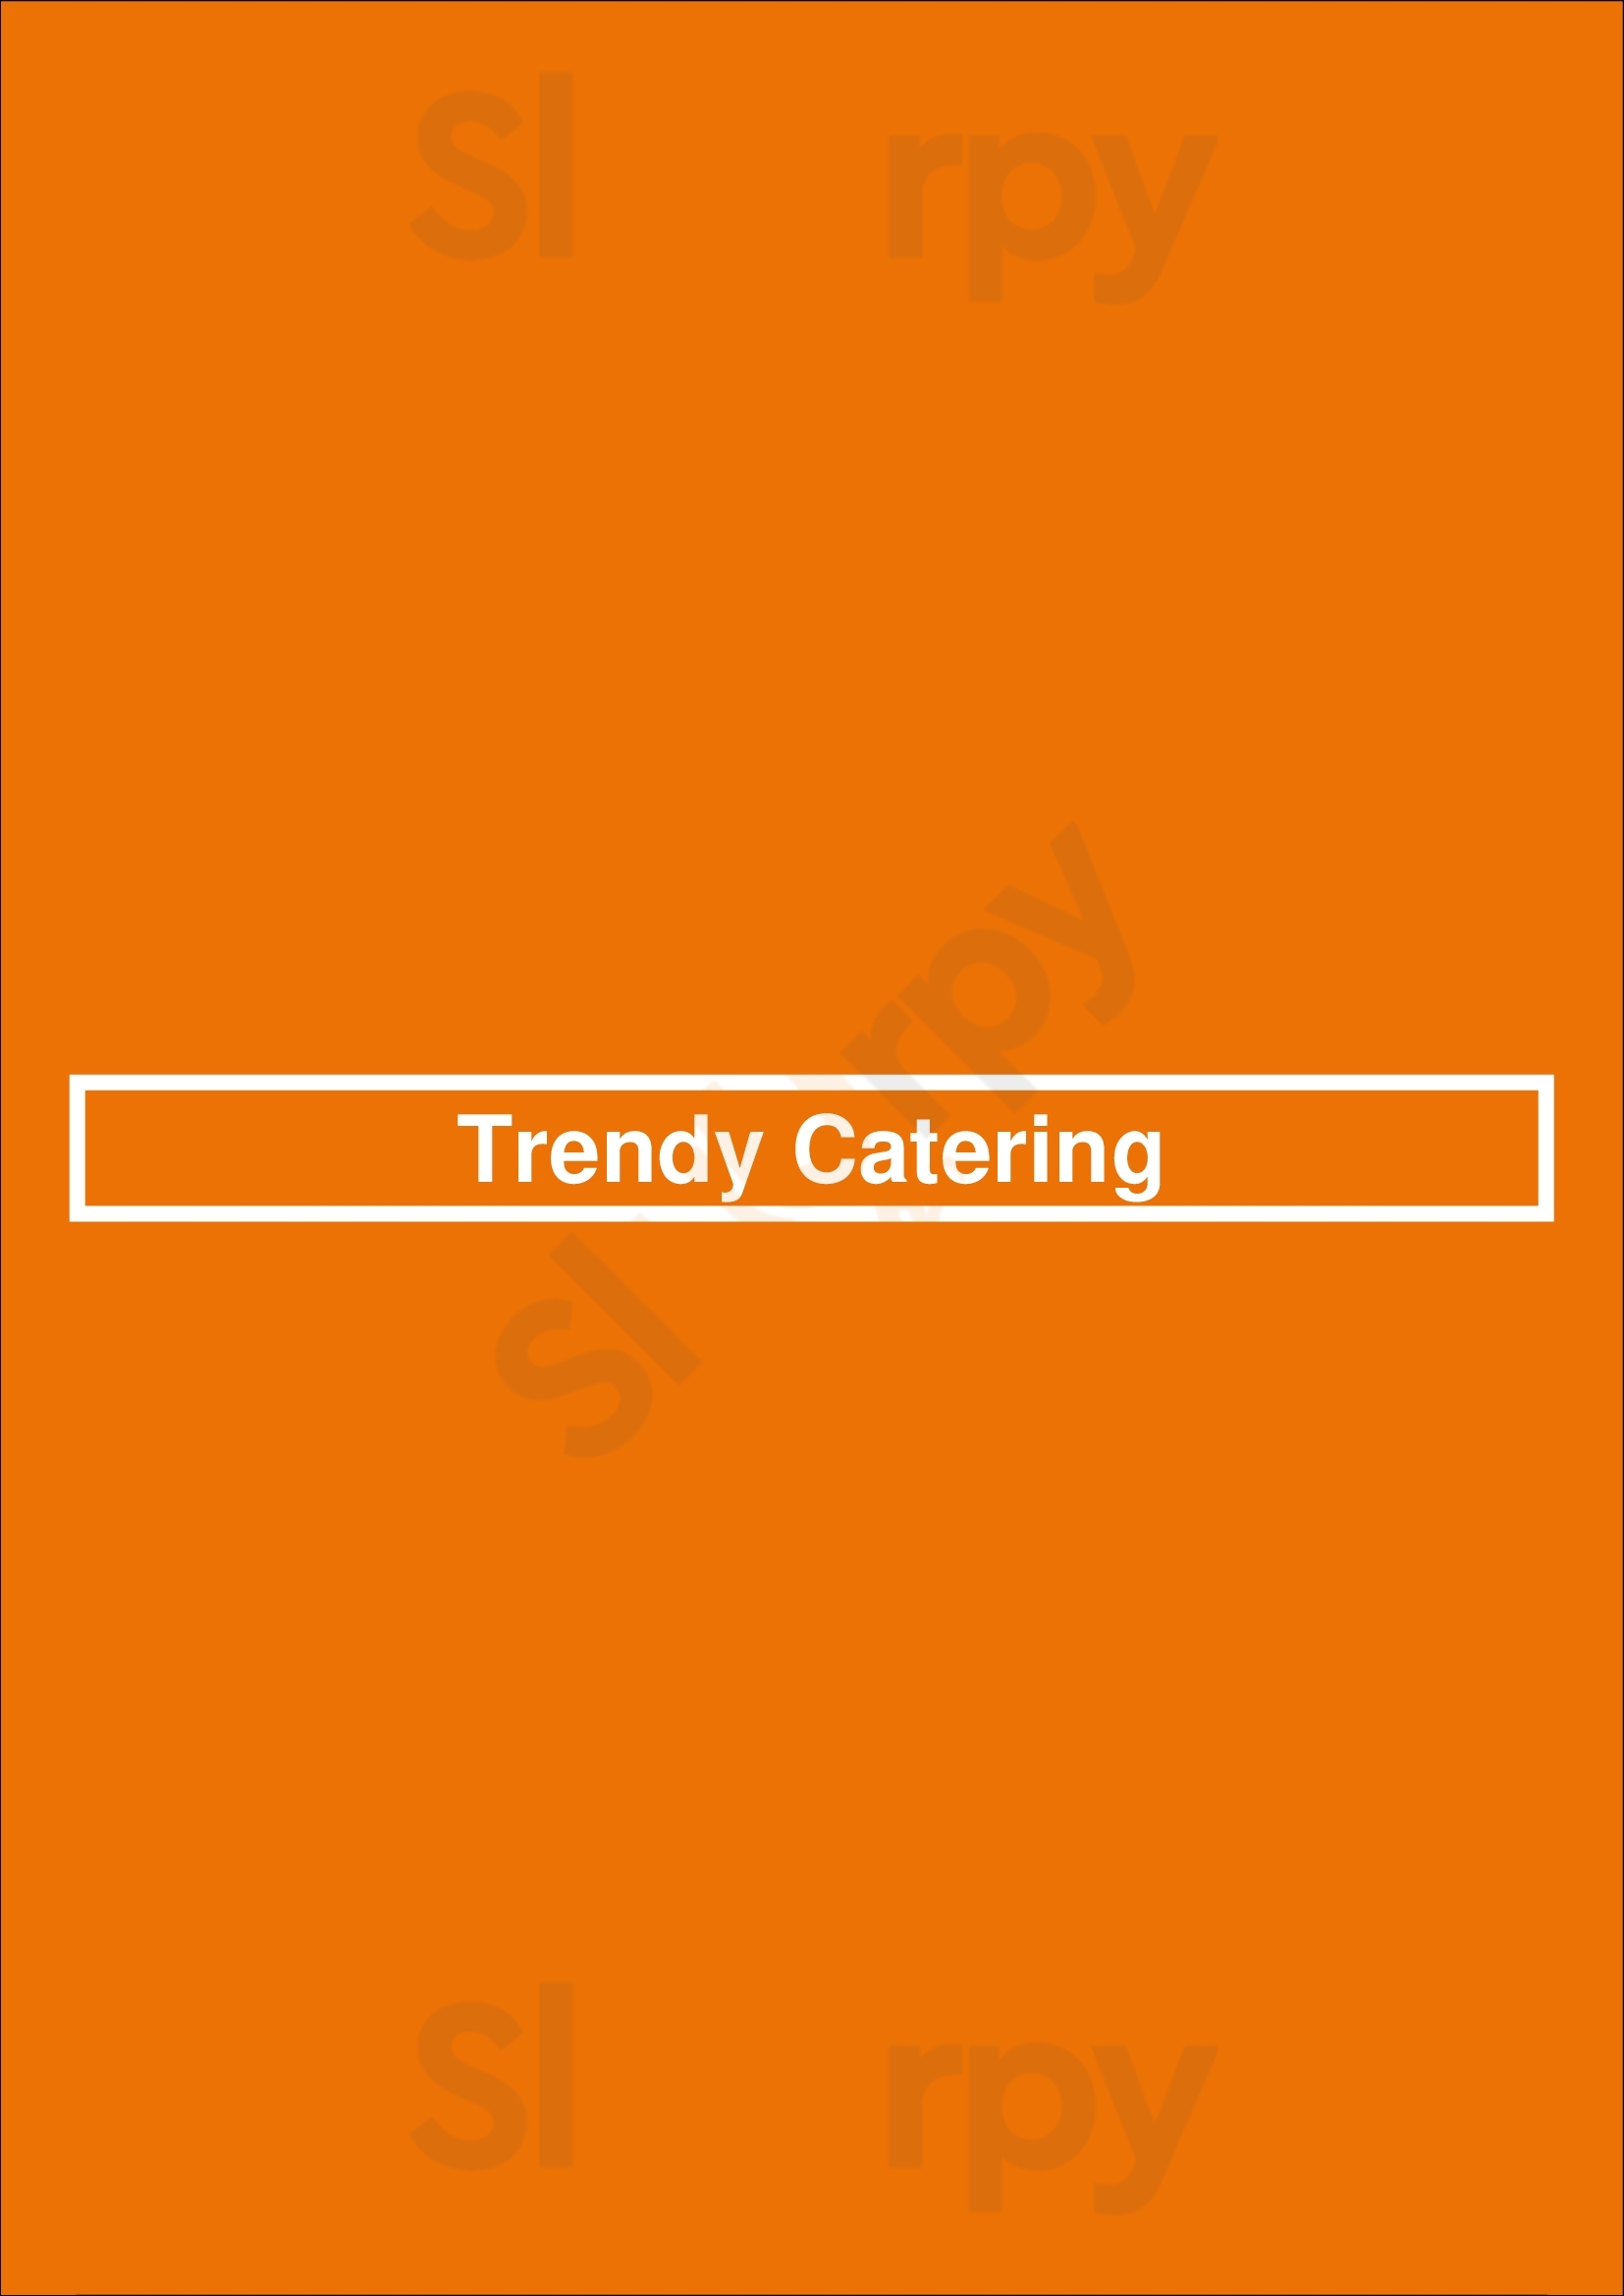 Trendy Catering Fresno Menu - 1